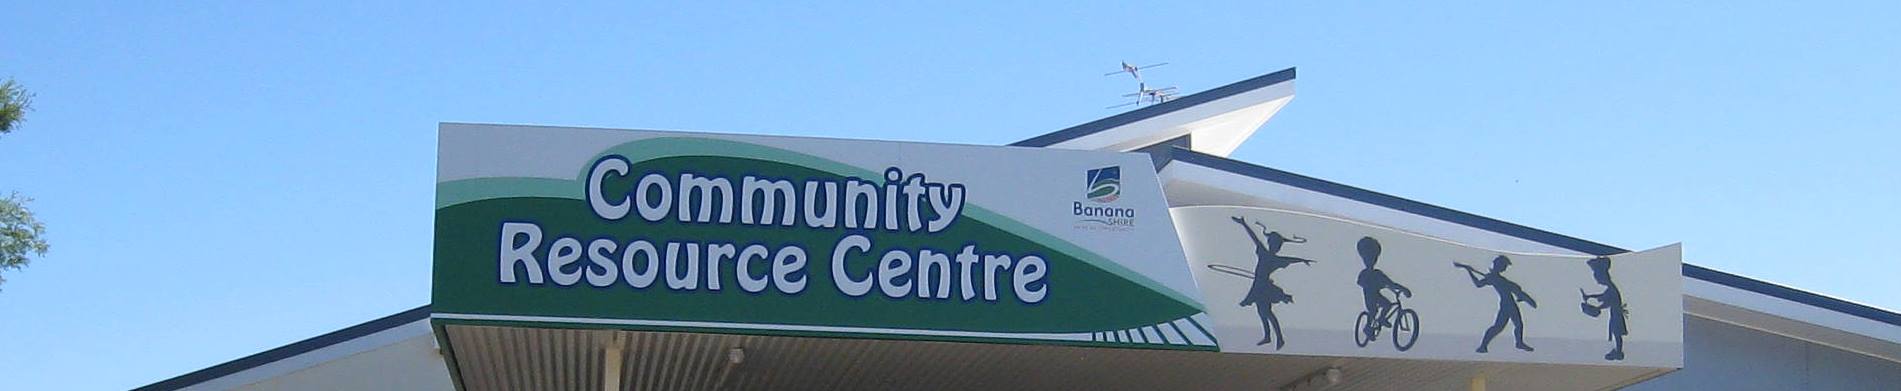 Community Resource Centre